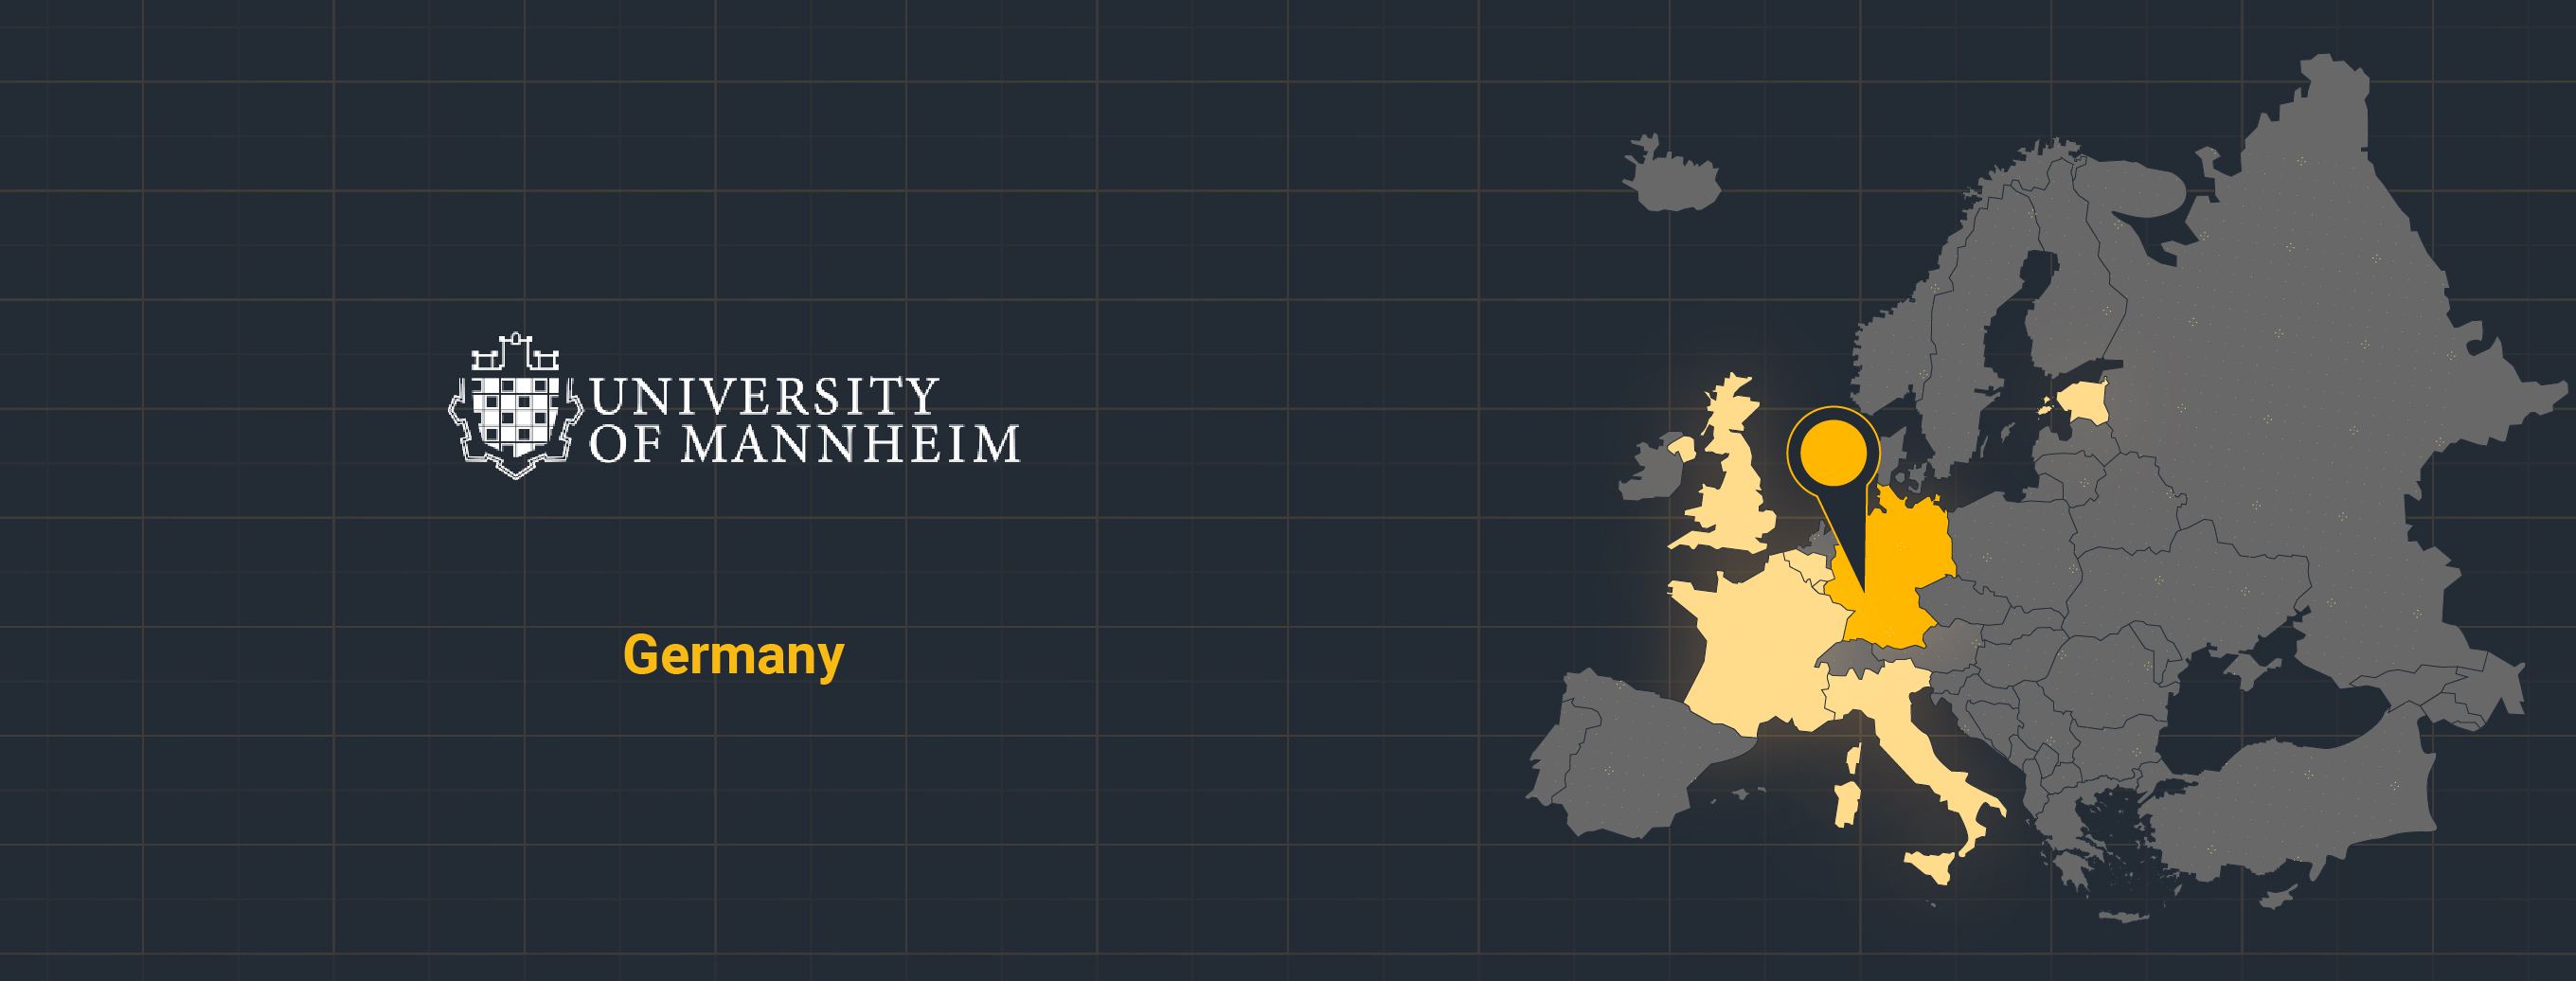 University of Mannheim map highlights Germany